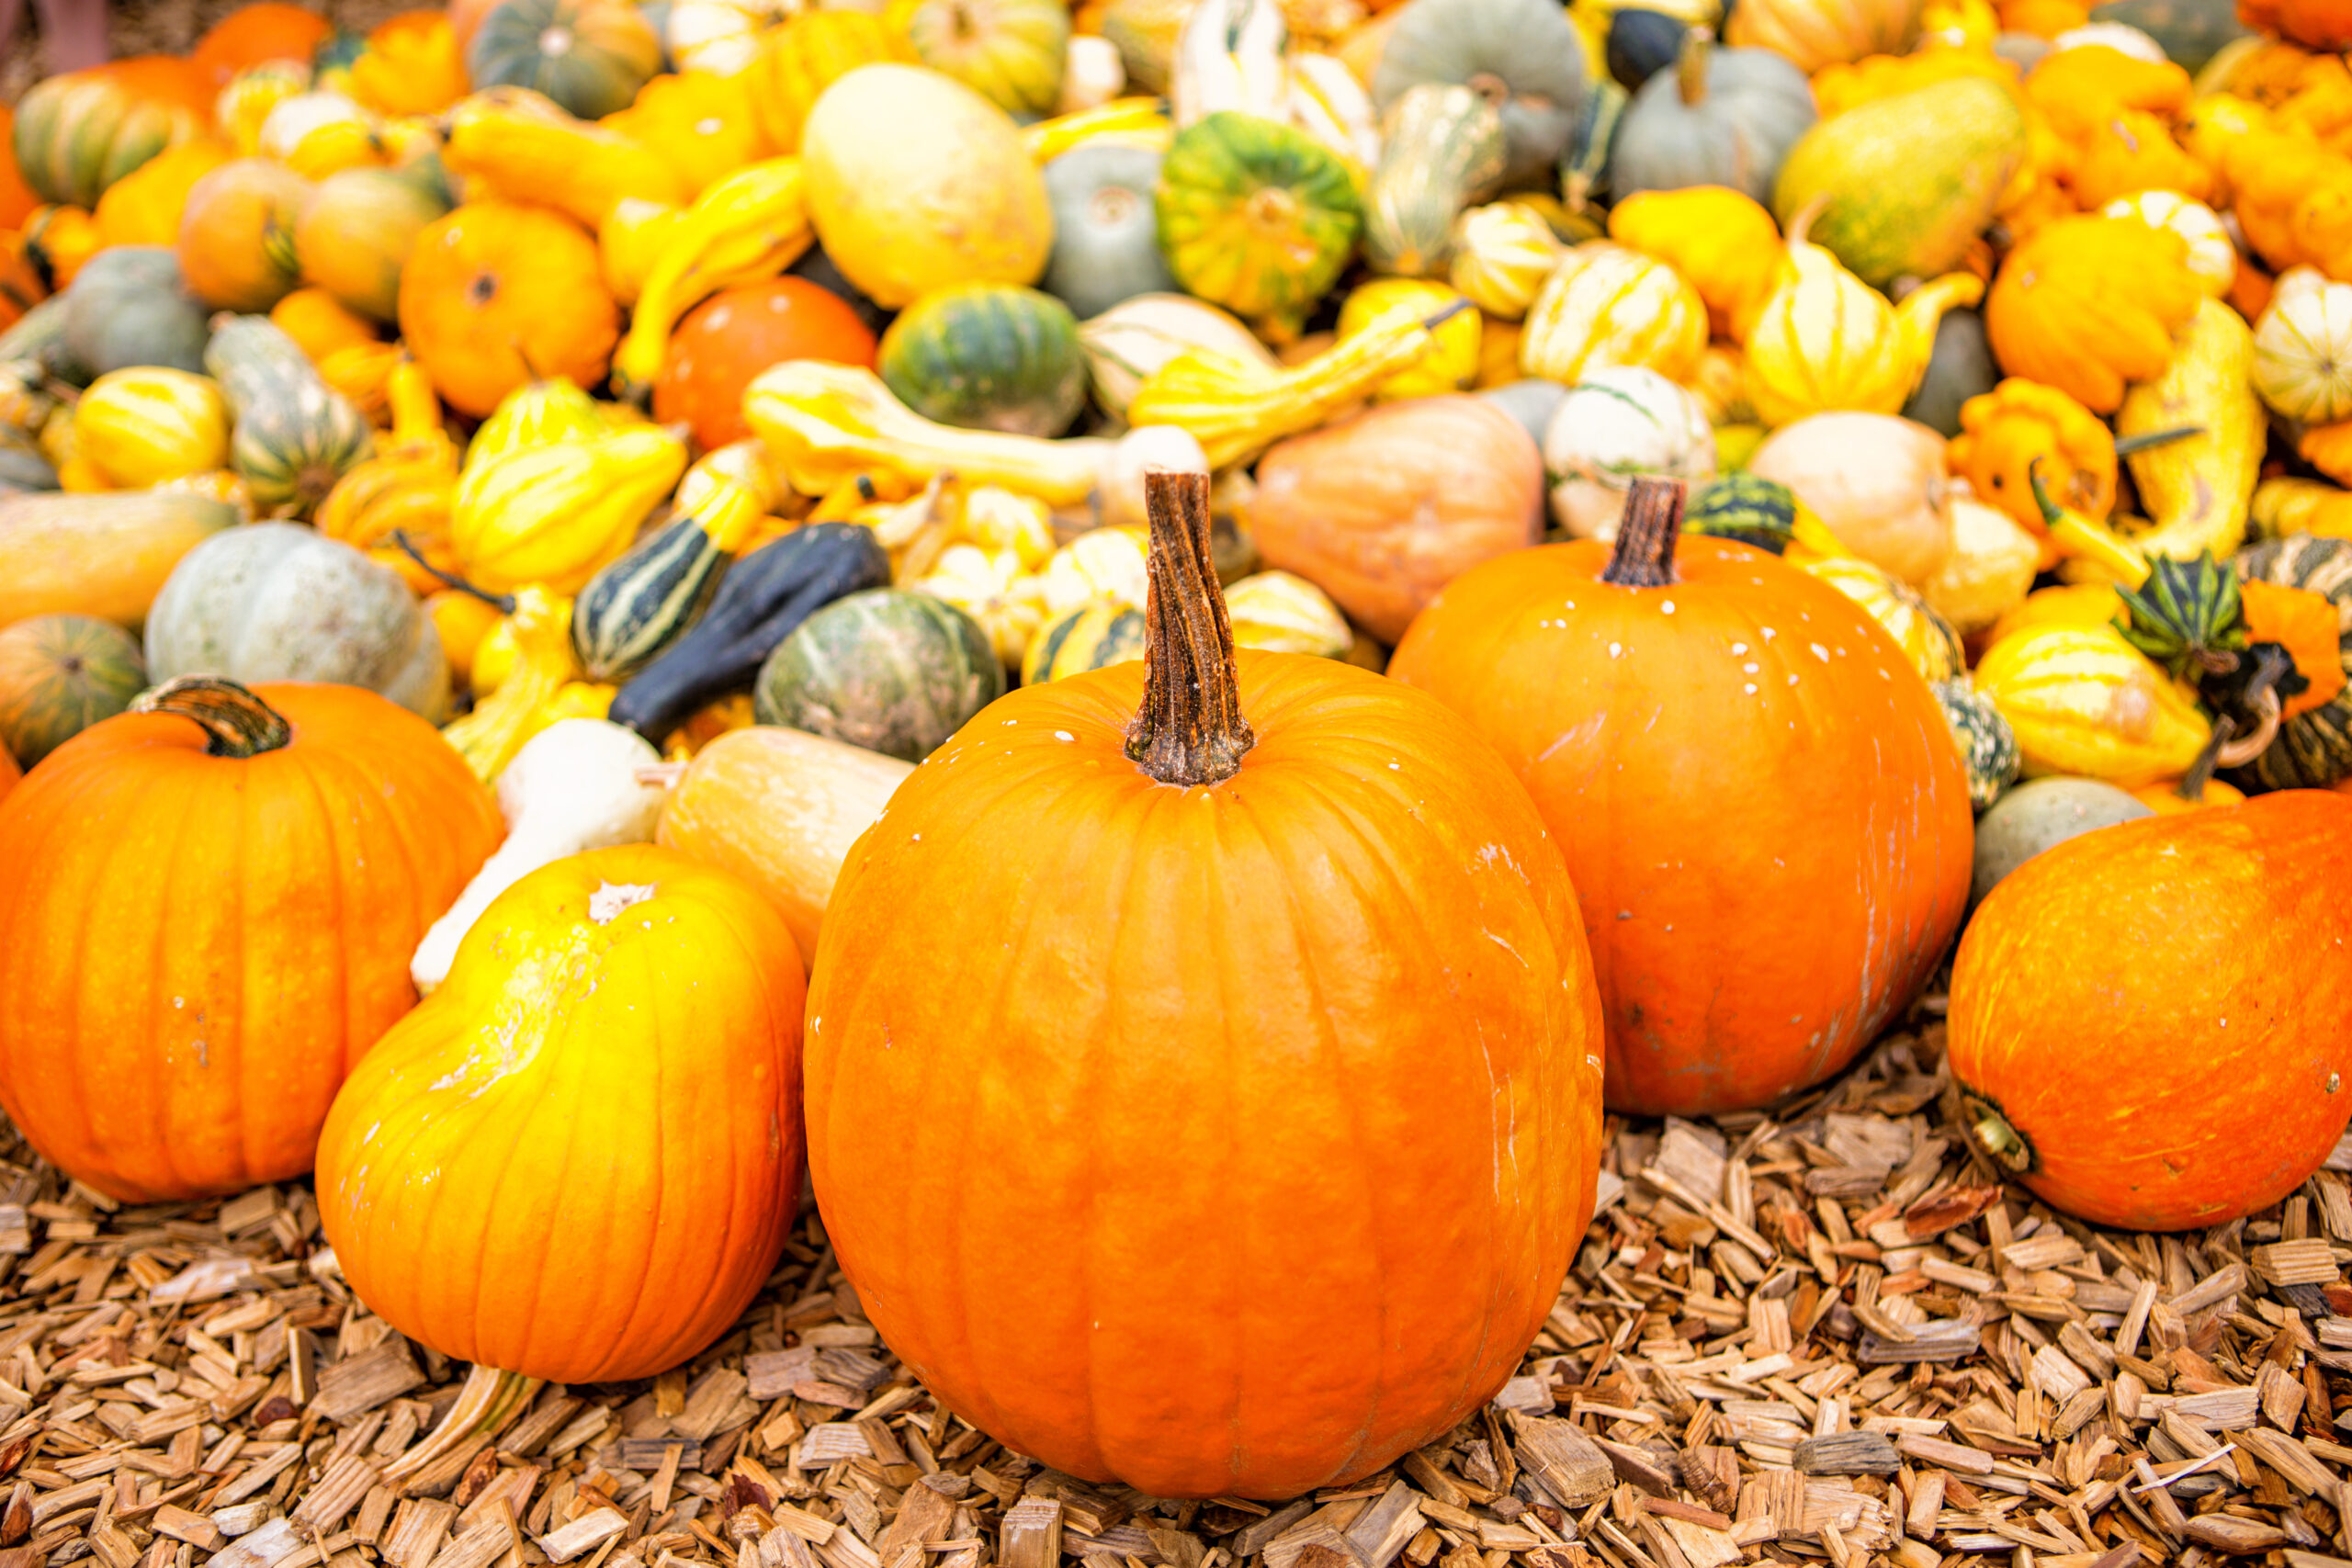 Nutrition: Pumpkin as a seasonal superfood